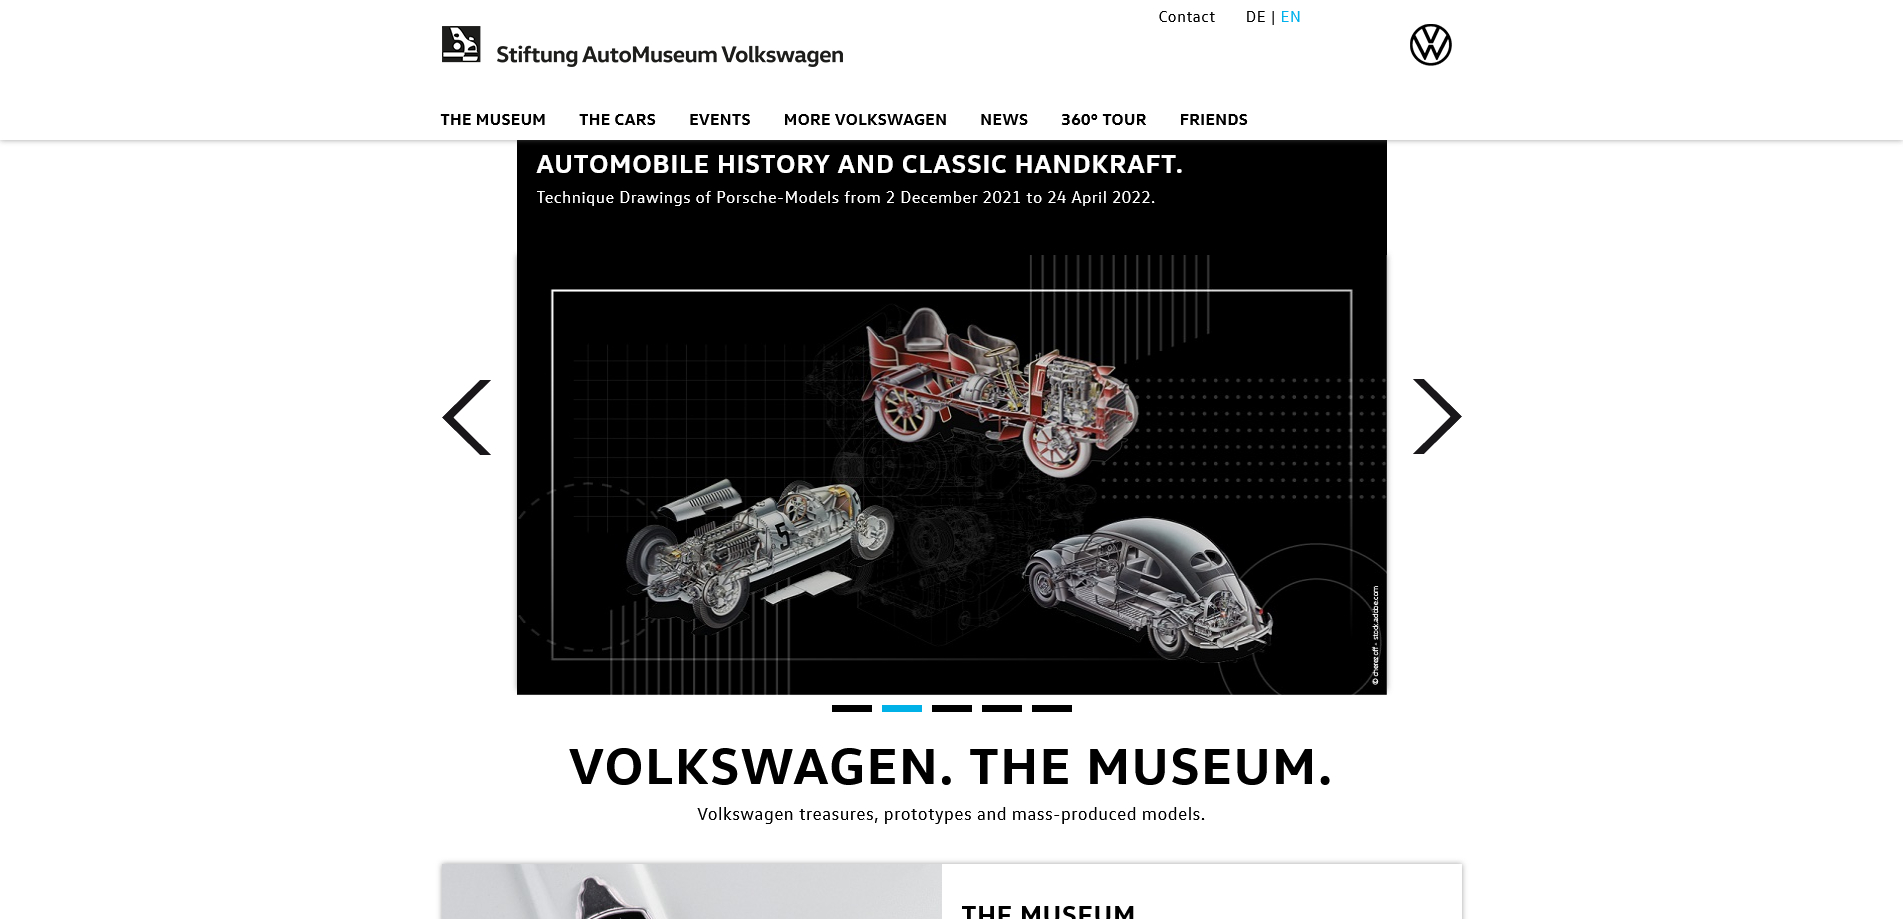 Stiftung AutoMuseum Volkswagen